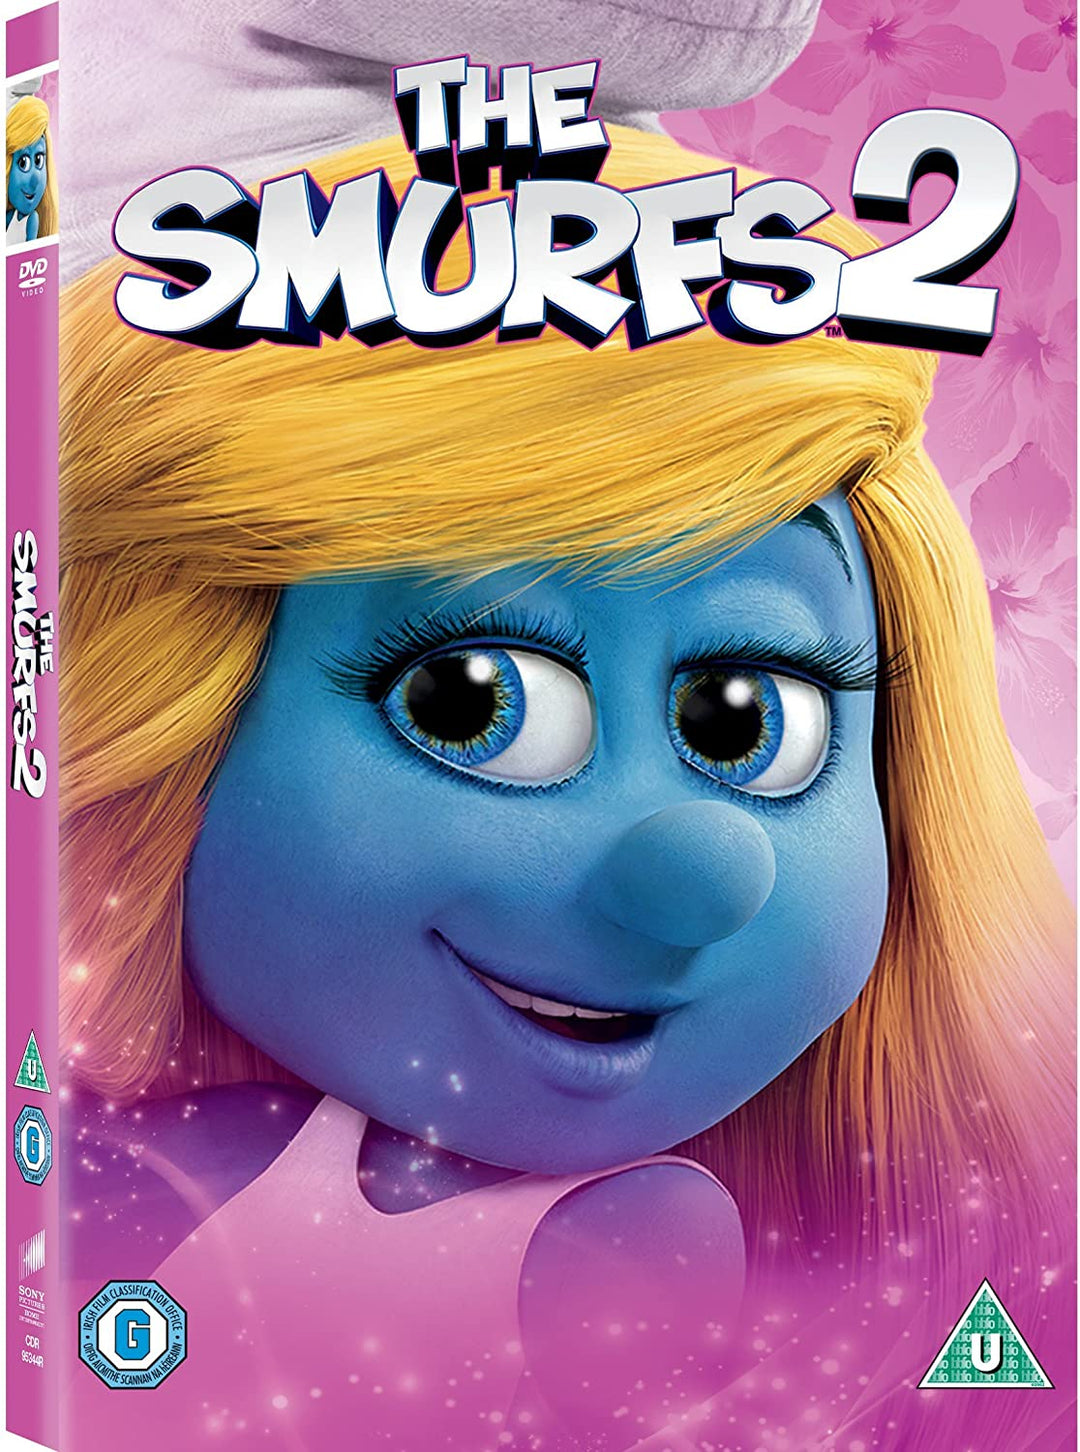 The Smurfs 2 [2013] - Family/Comedy [DVD]